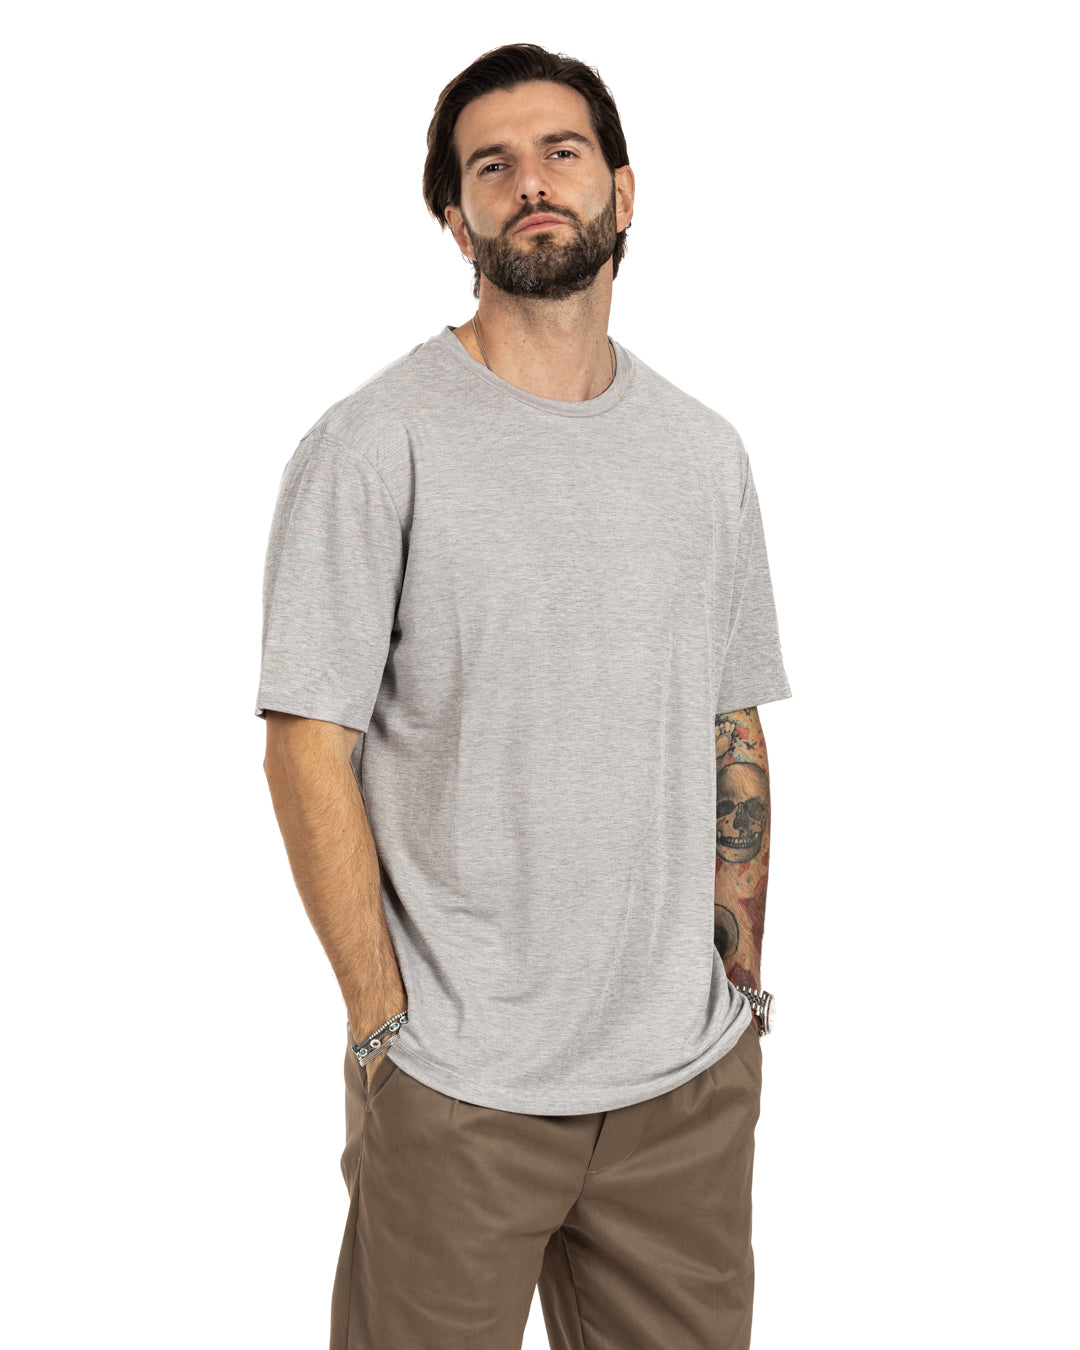 Tee - basic gray textured t-shirt